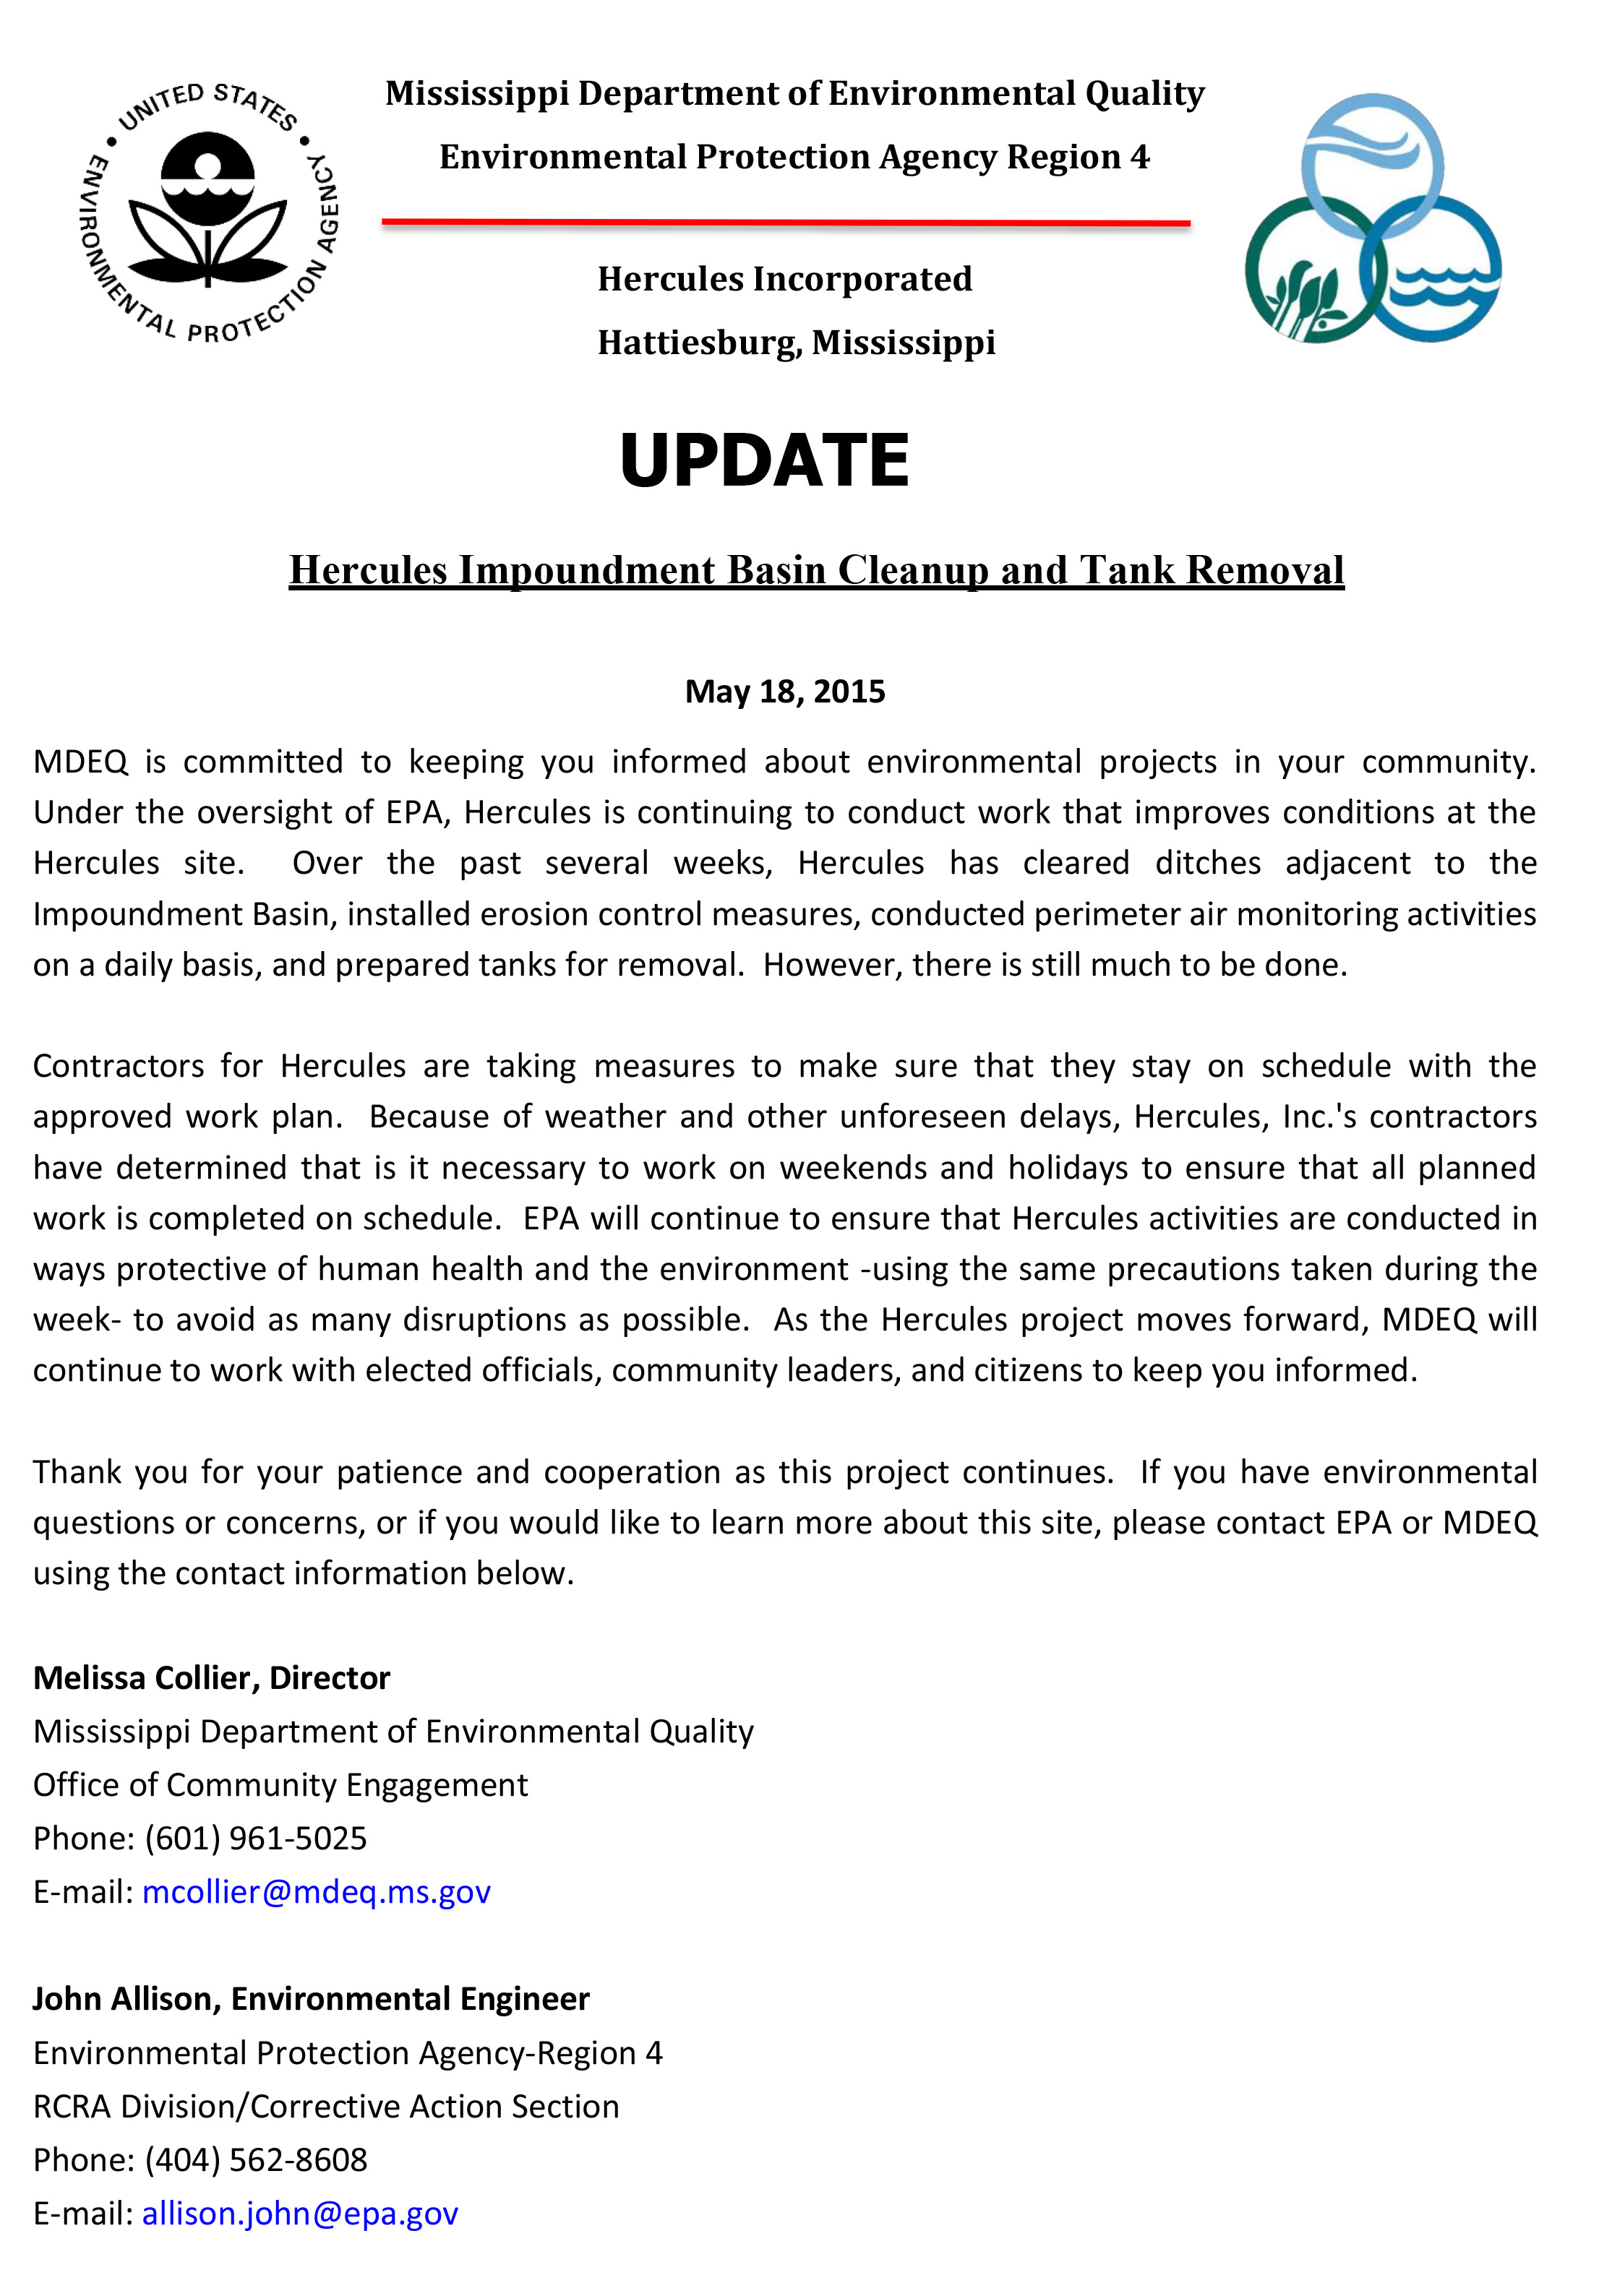 Hercules Weekend Work Announcement 05 20 15MC-1